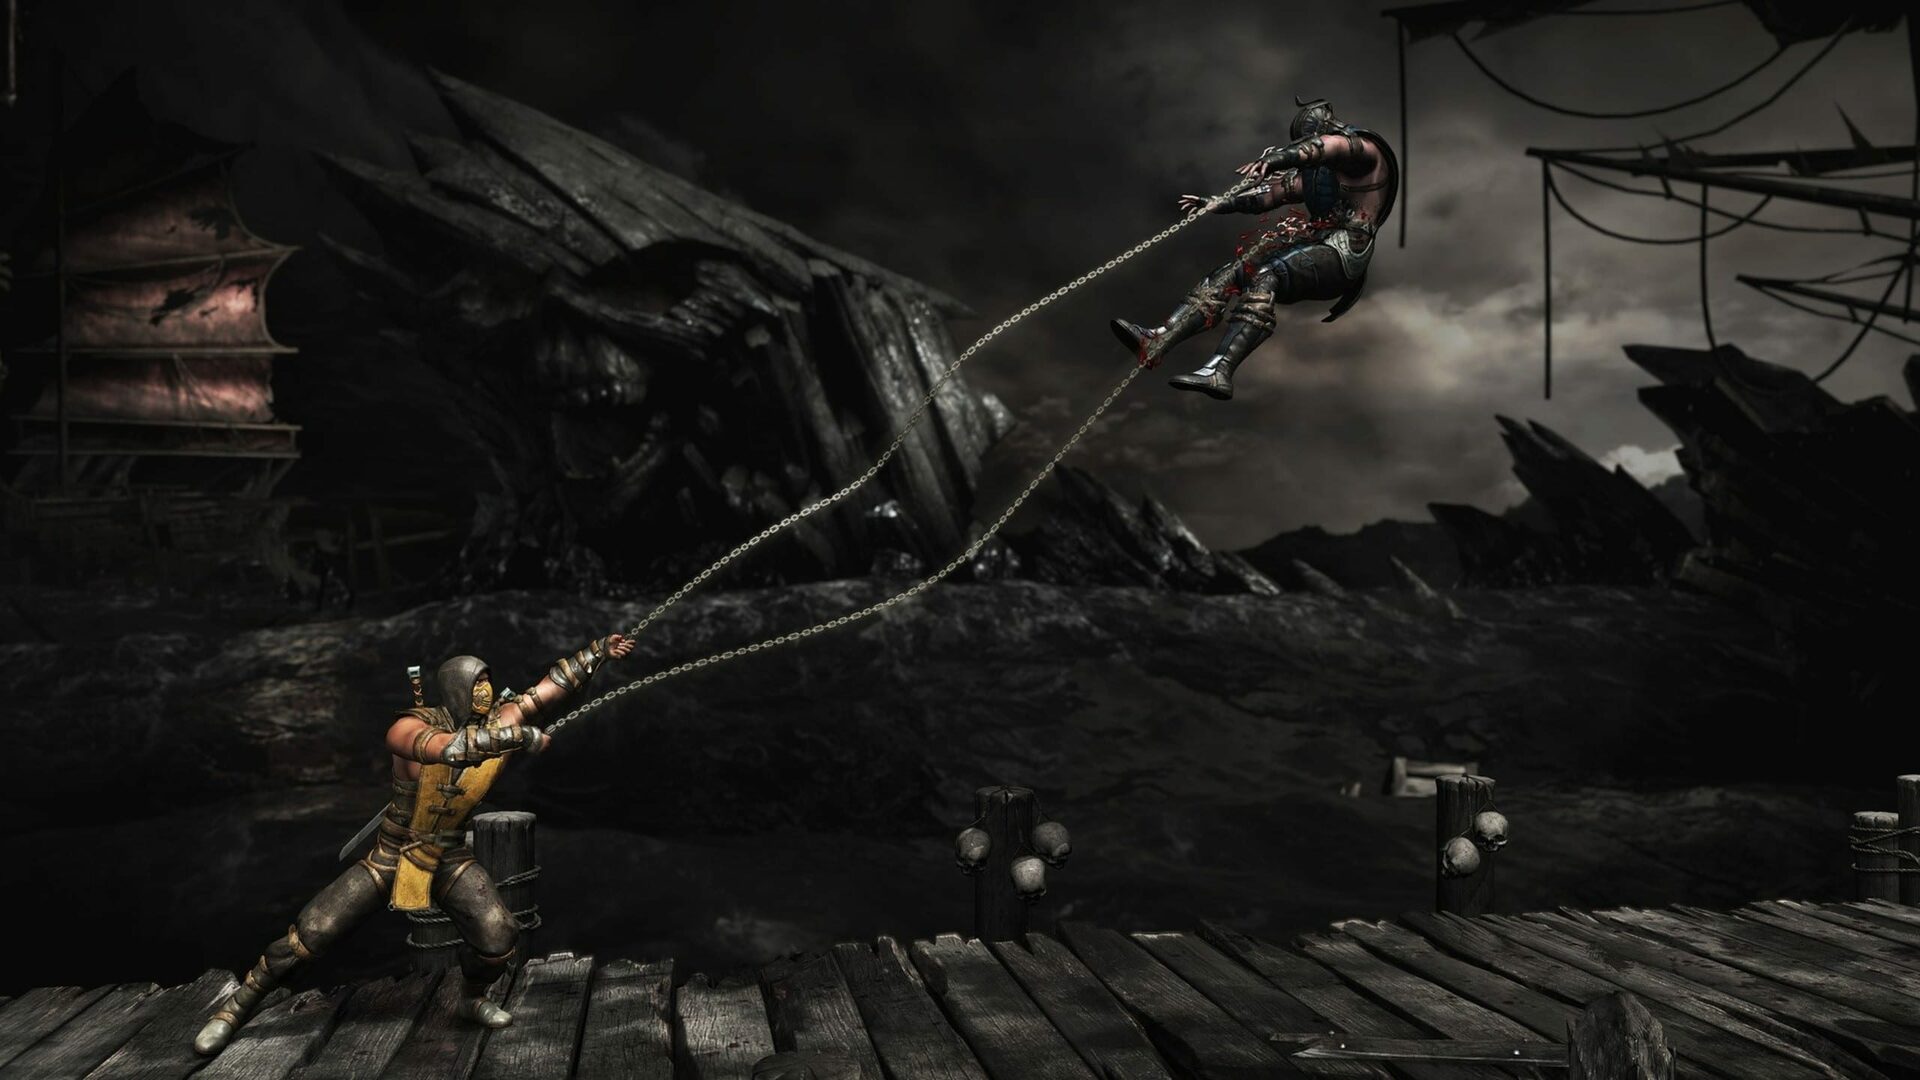 Mortal Kombat X - Kombat Pack - PC - Compre na Nuuvem